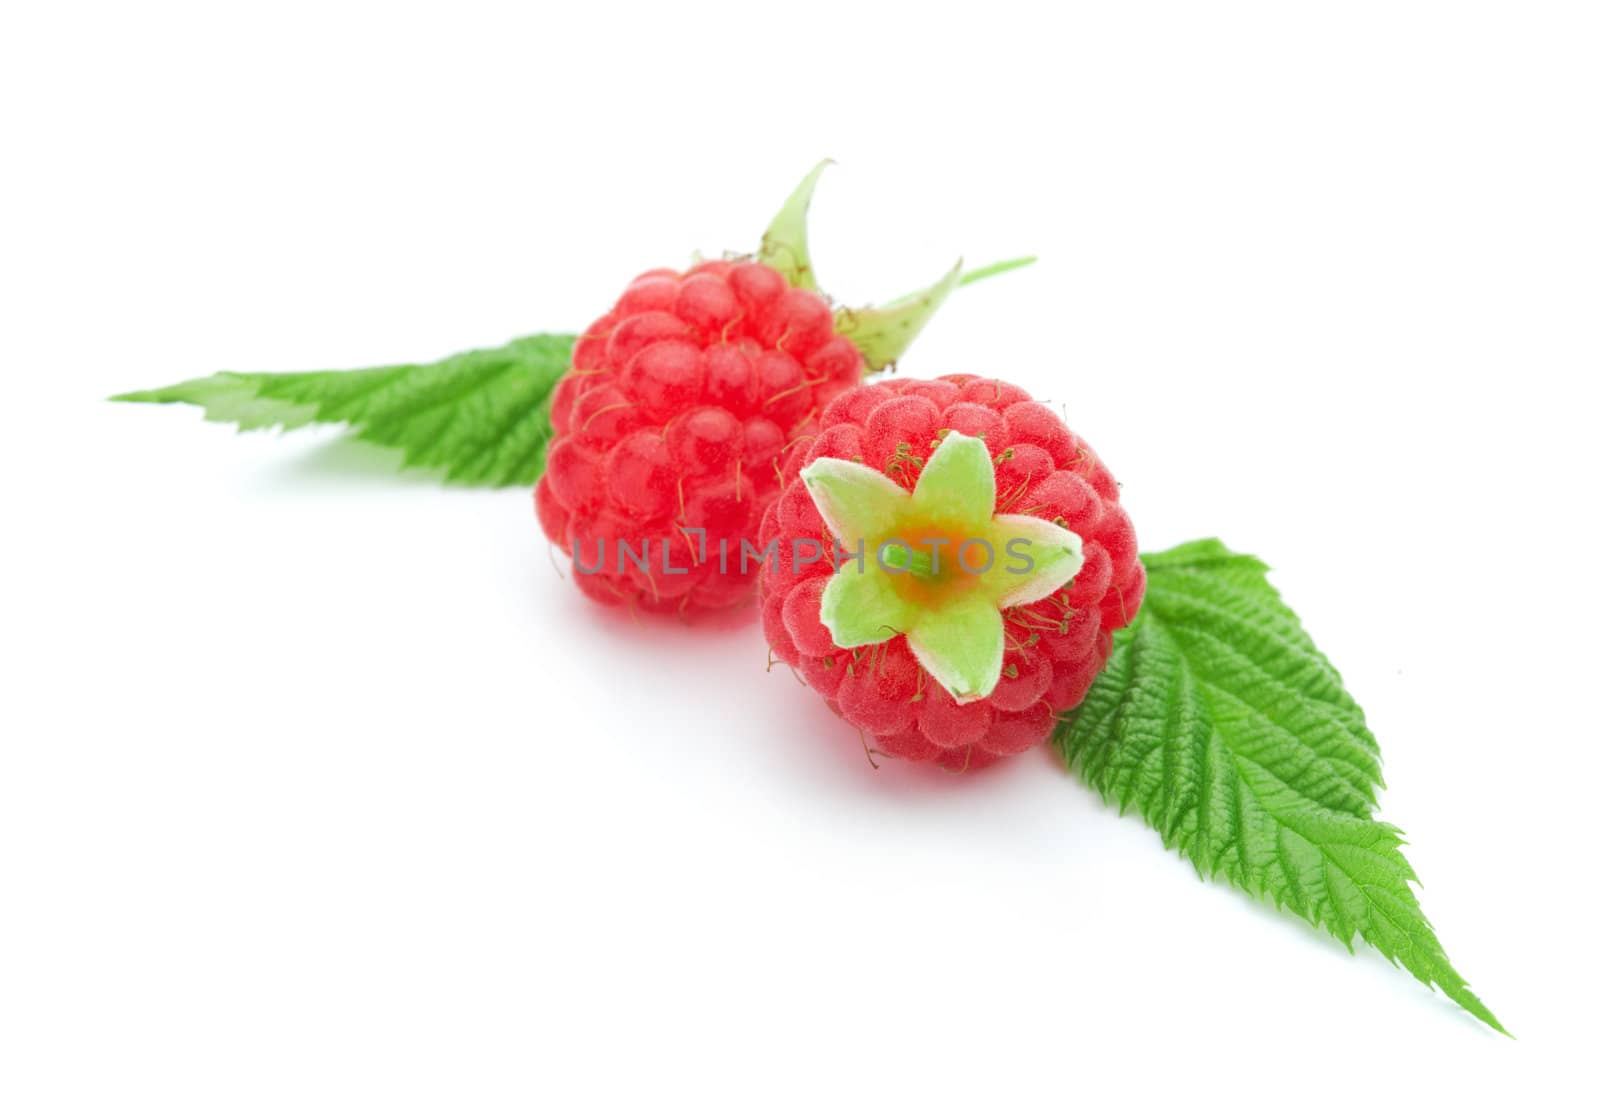 Raspberries by romanshyshak